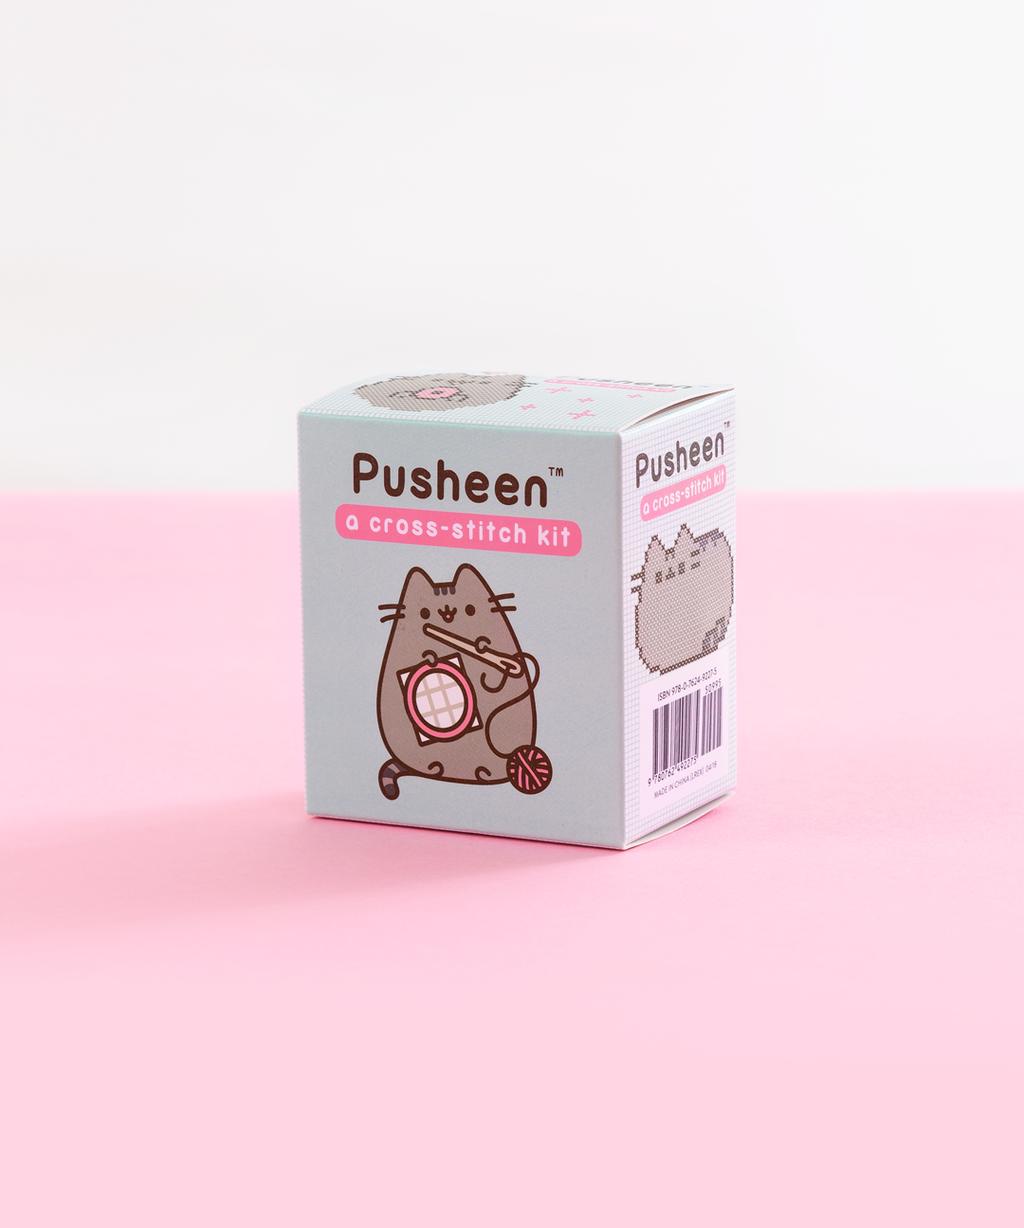 pusheen mini cross stitch kit Fourth Alternate image  width=&quot;825&quot; height=&quot;699&quot;